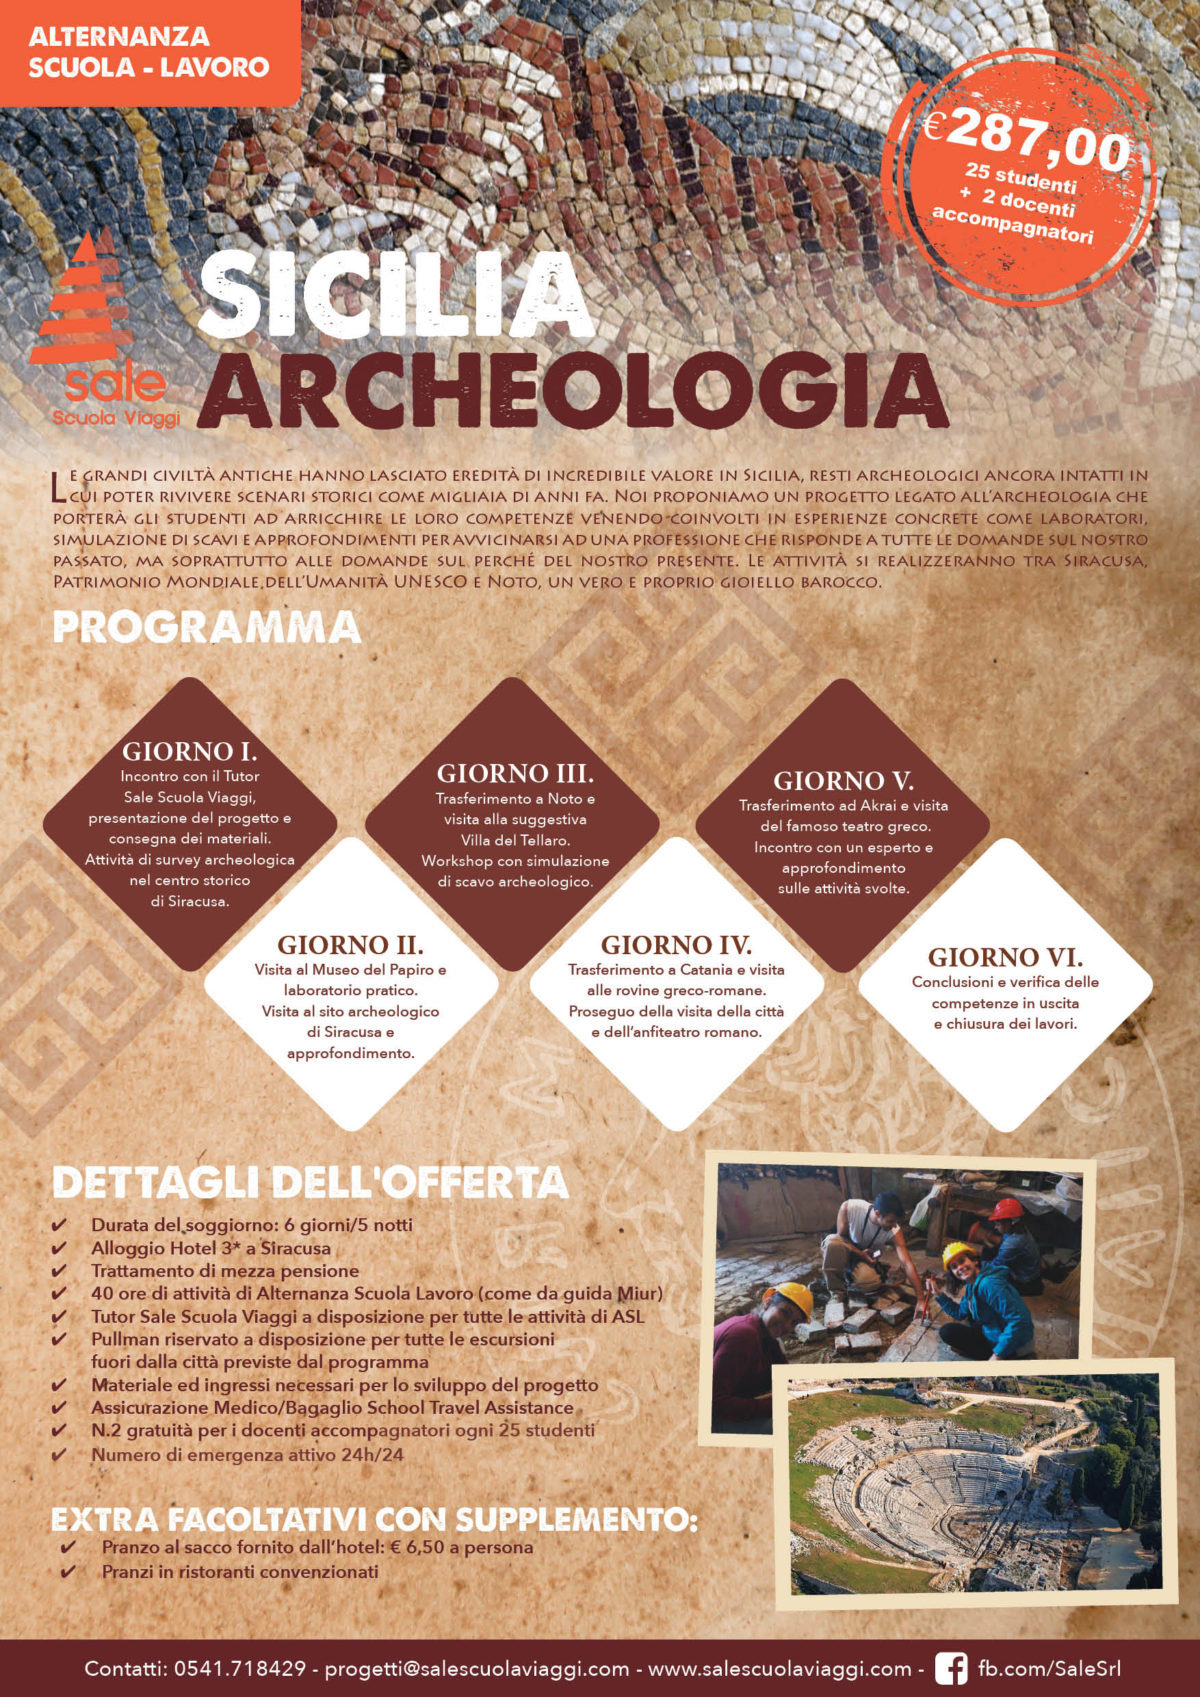 Offerta SiciliaArcheologia - Sale Scuola Viaggi